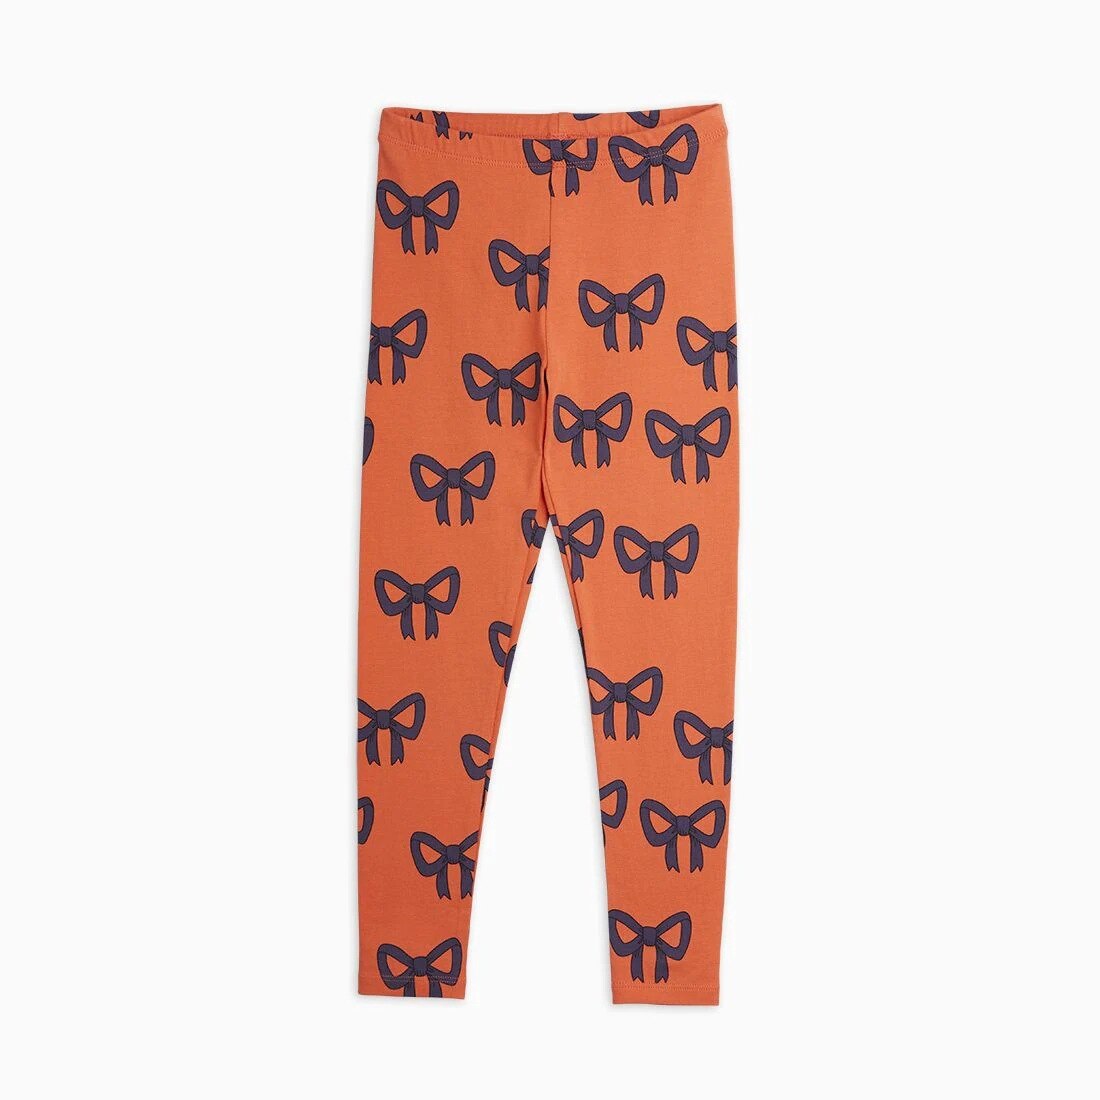 Orange stretch pants with bowties